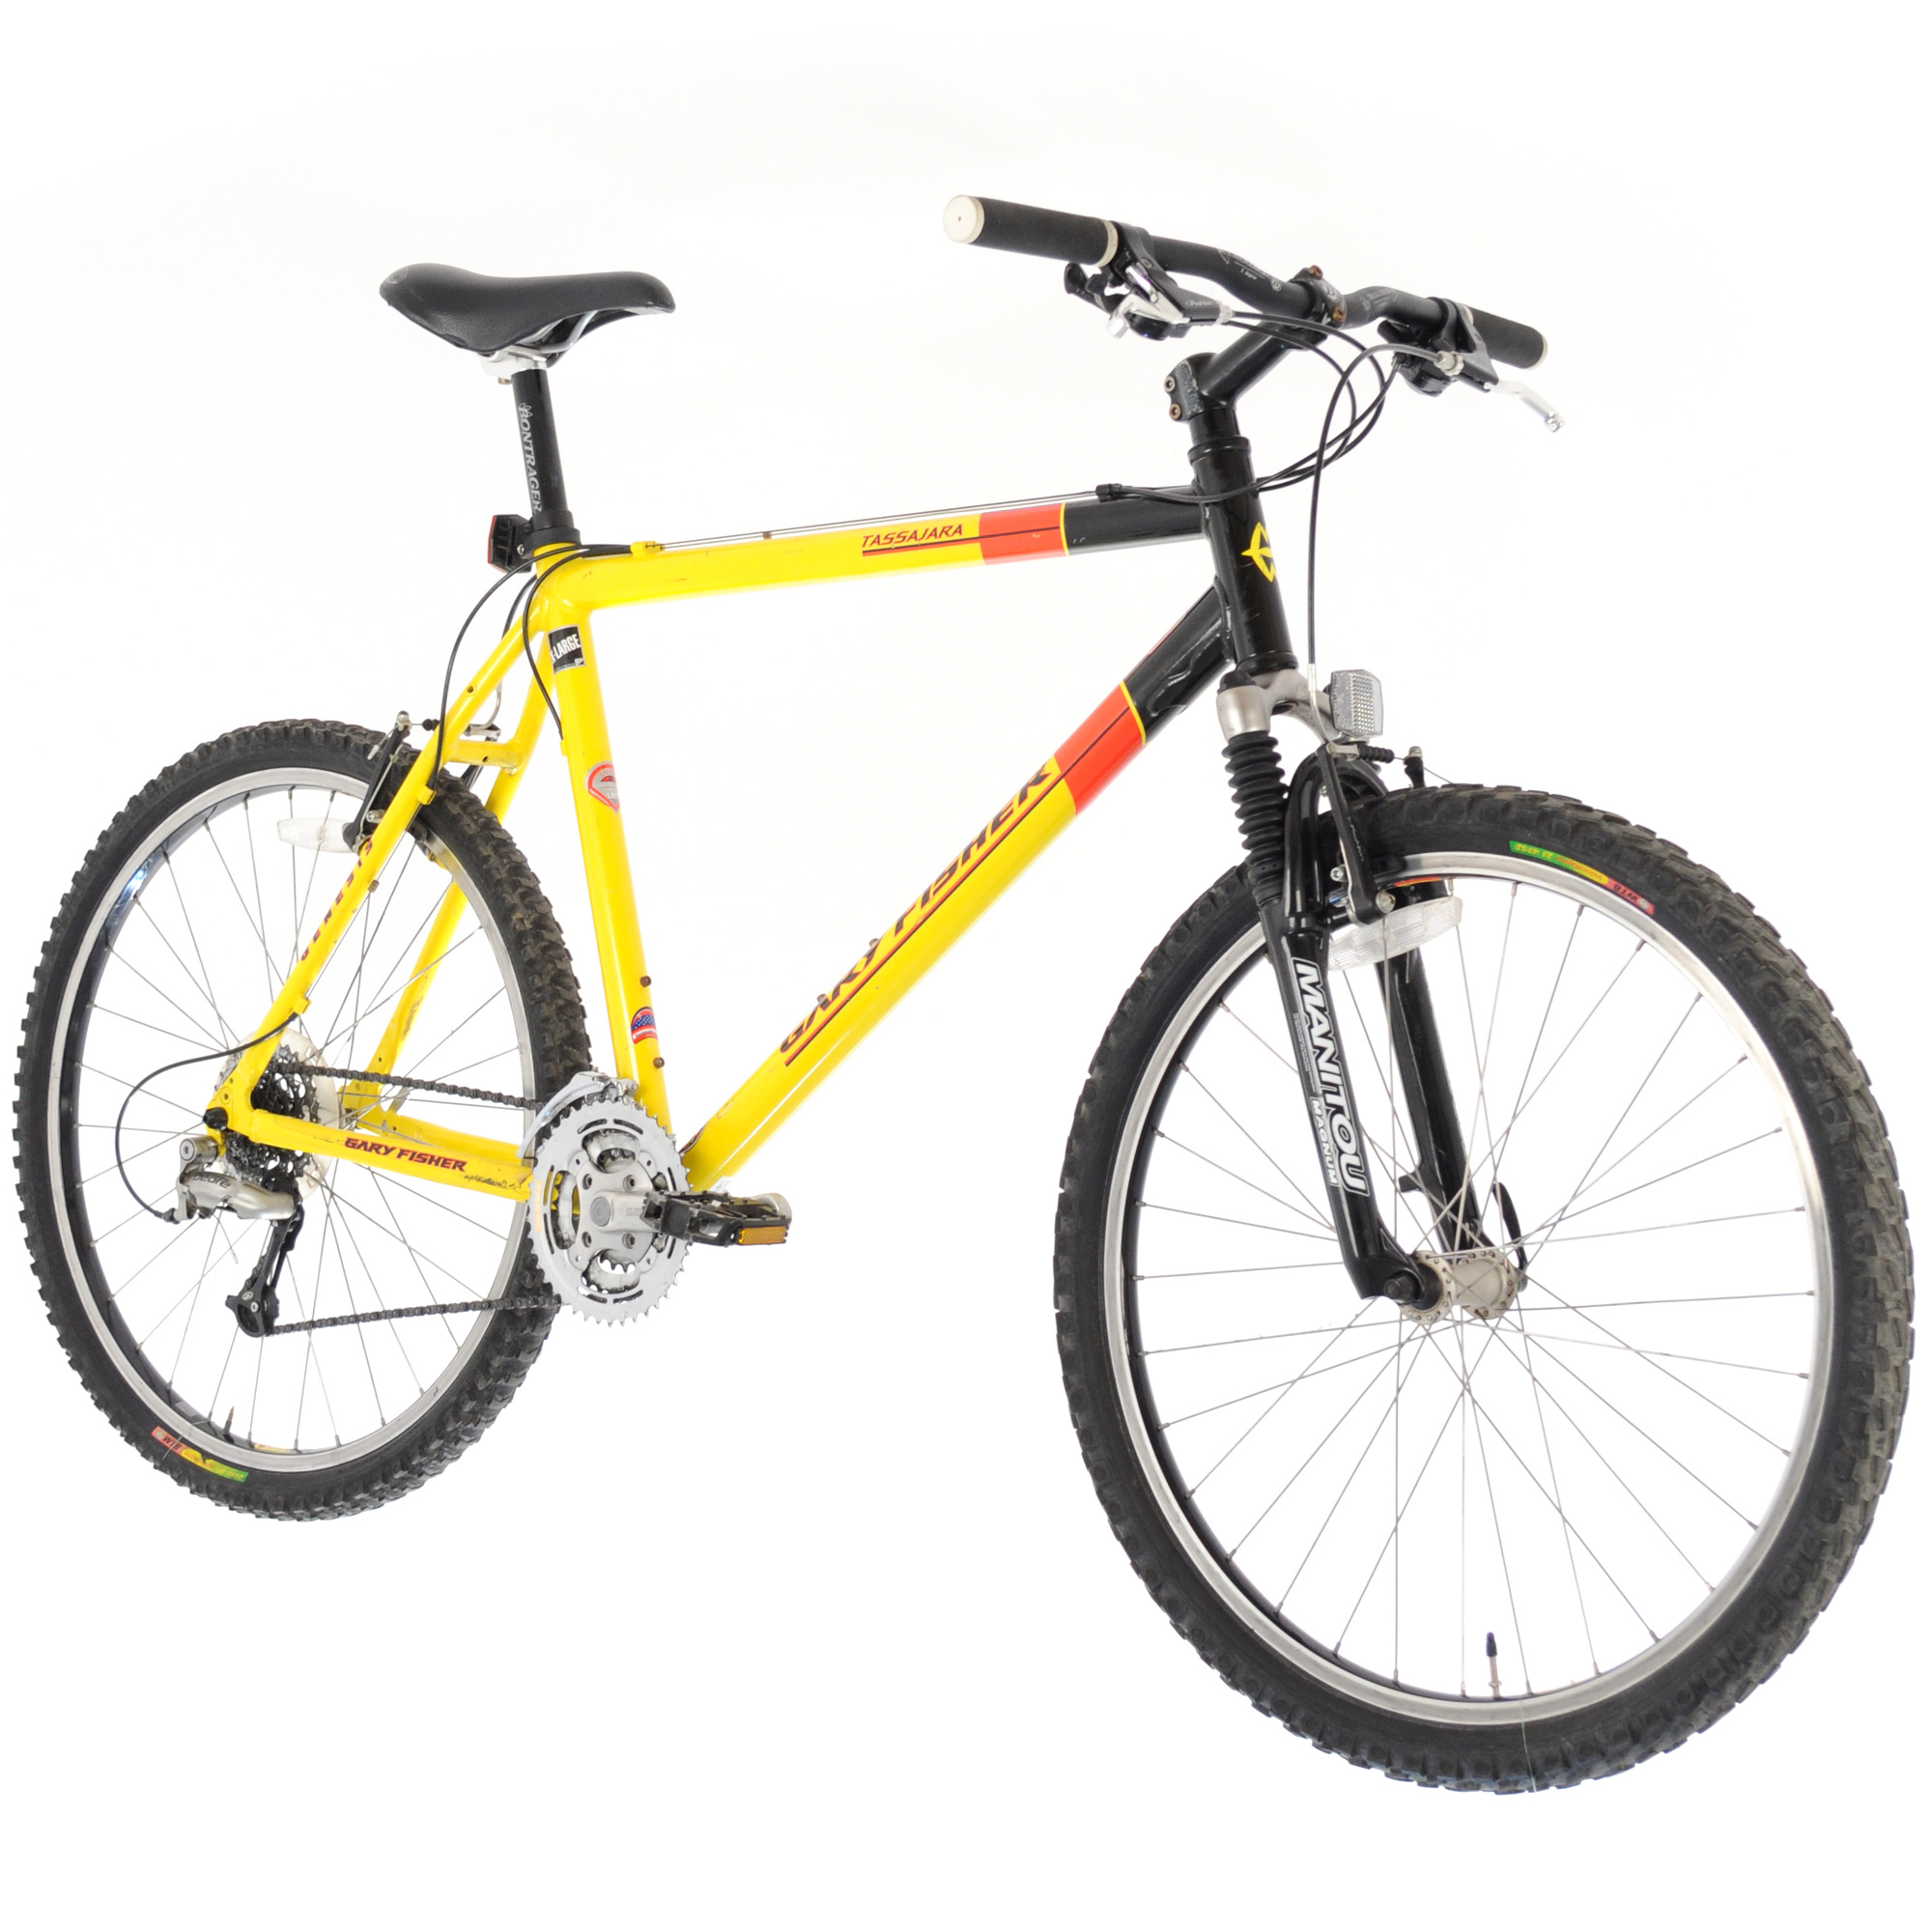 gary fisher yellow mountain bike